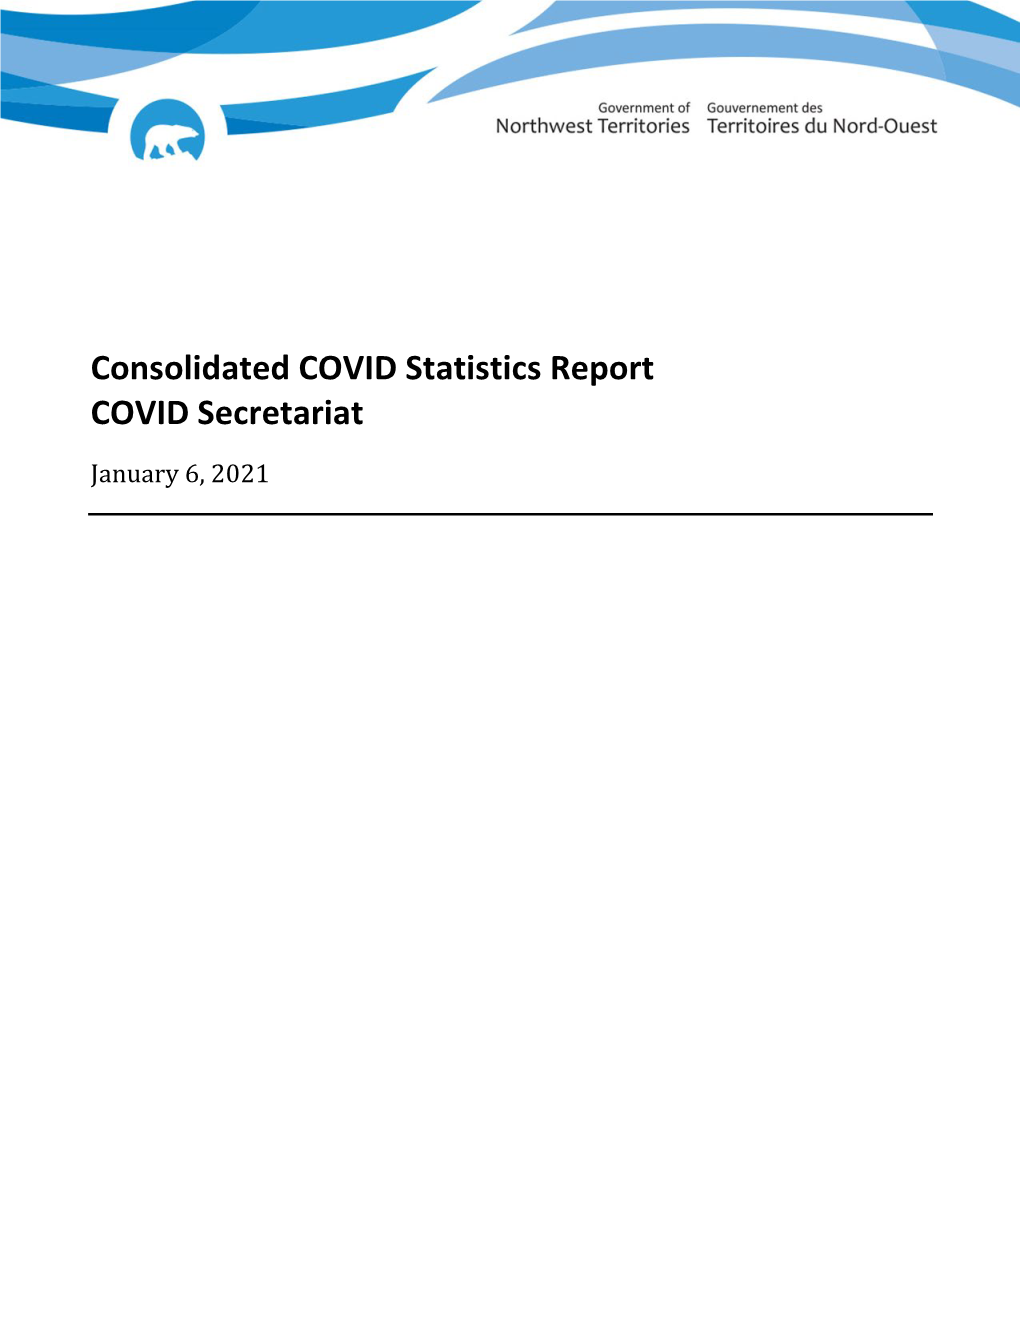 Consolidated COVID Statistics Report COVID Secretariat